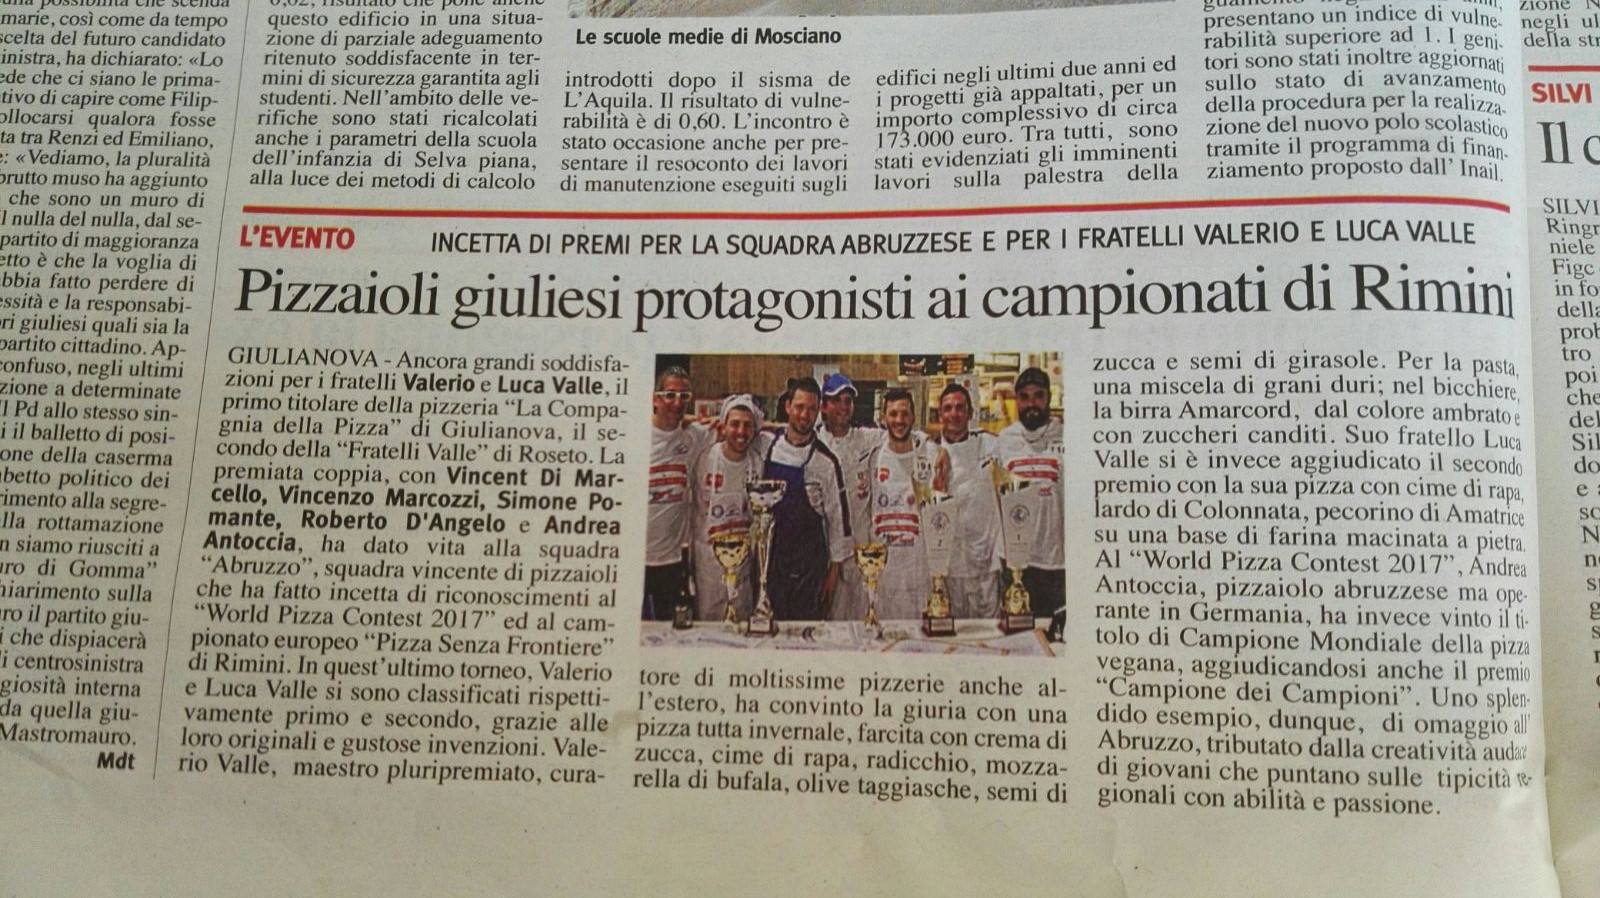 Pizzaioli Giuliesi protagonisti ai campionati di Rimini